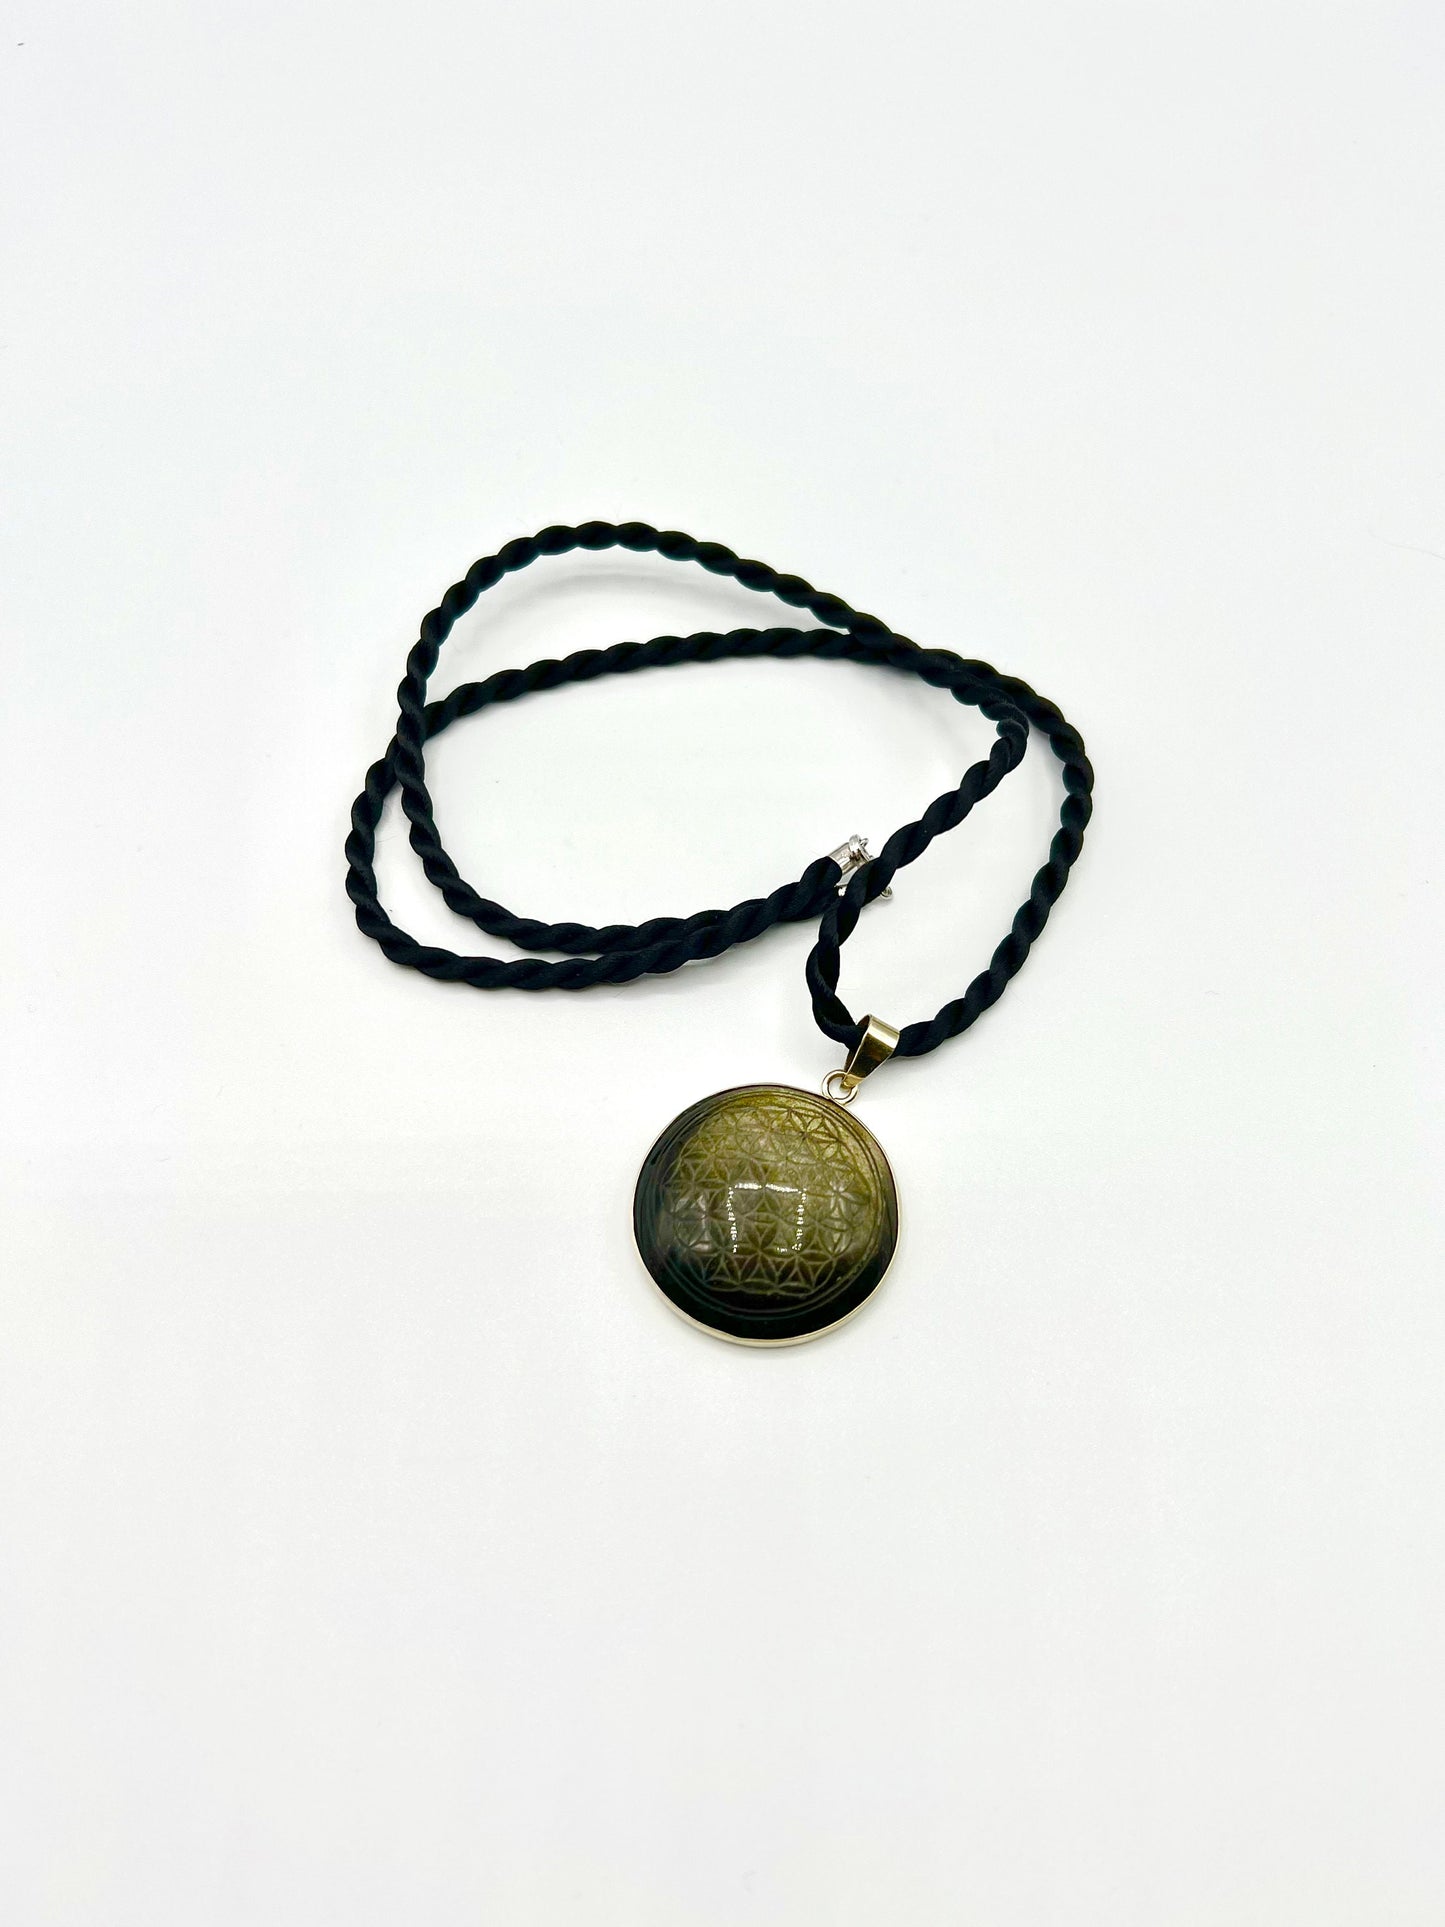 Black Obsidian Tree Of Life Pendant energy pendant necklace Sacred healing crystal jewelry